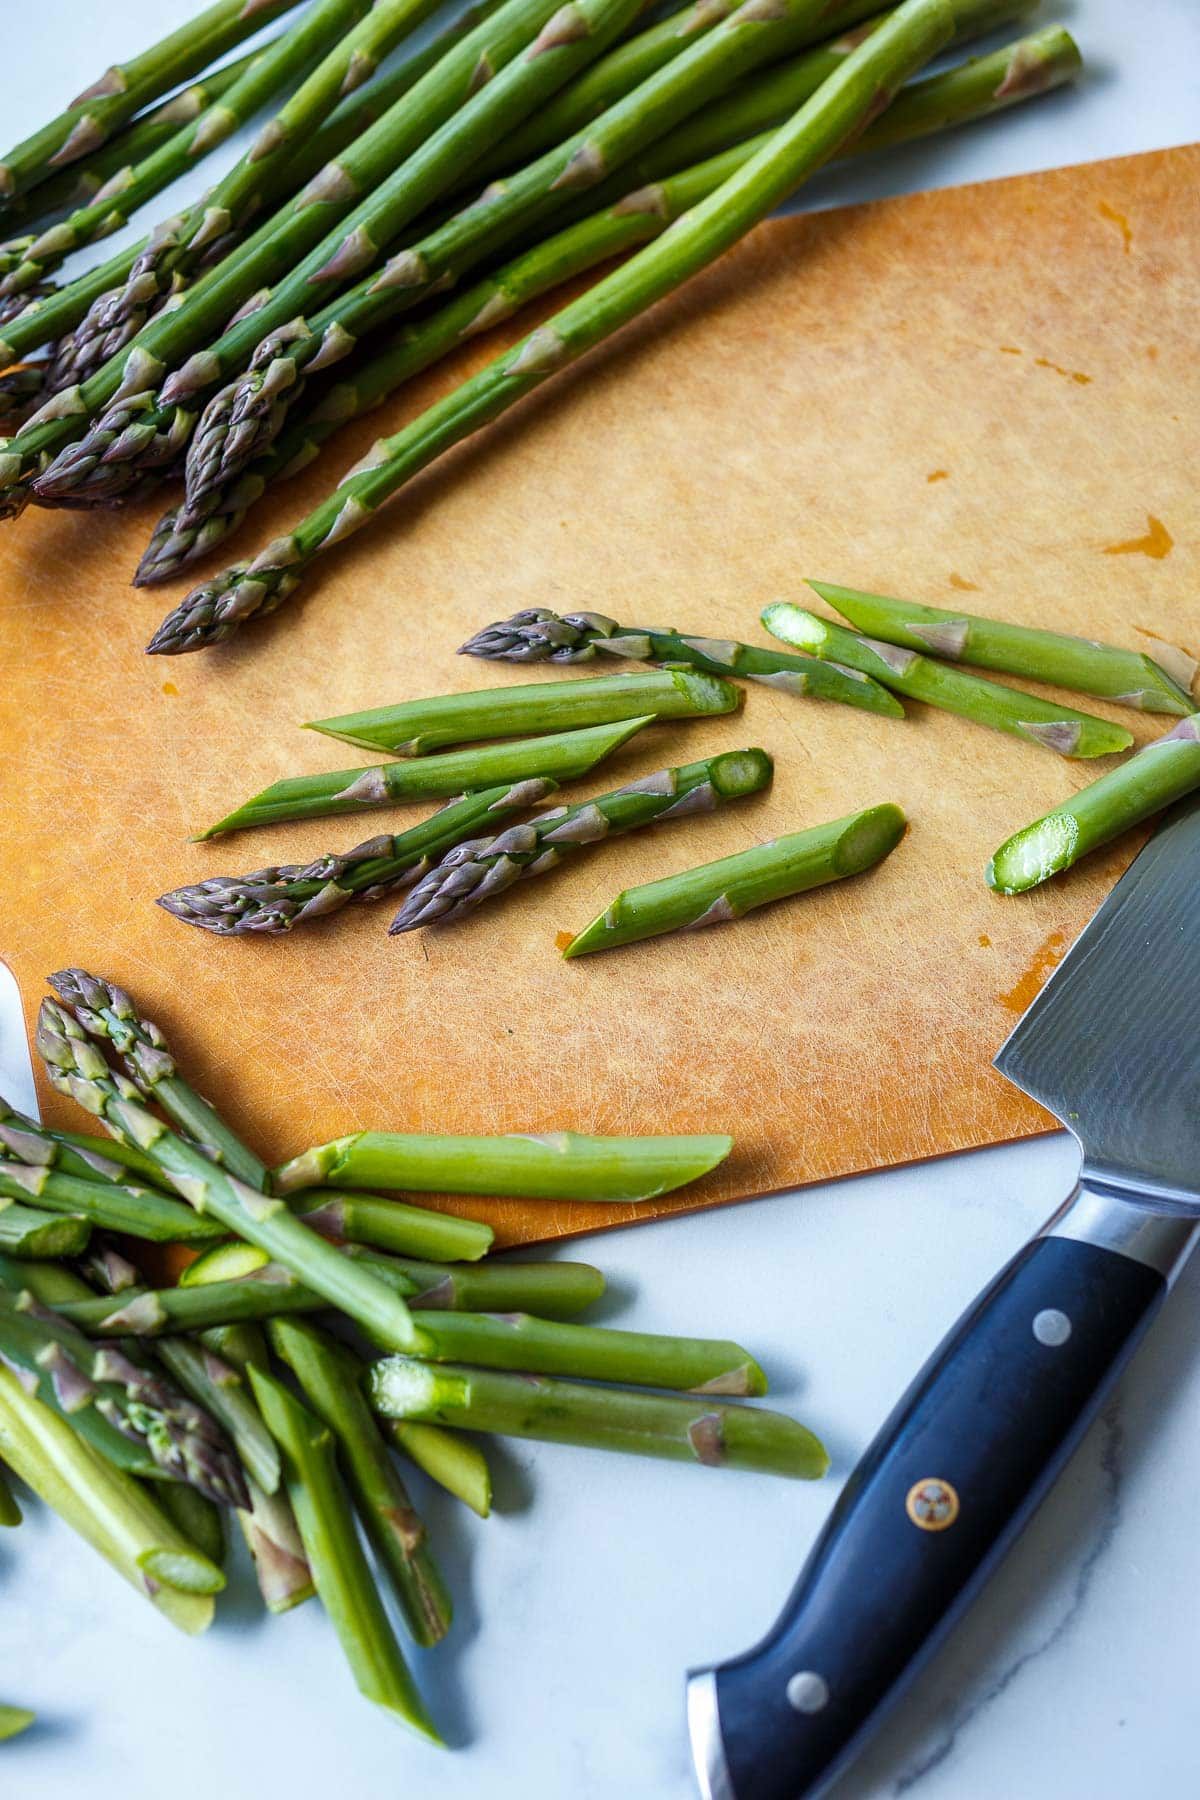 sharp knife cutting asparagus bunch into diagonal julienne pieces.